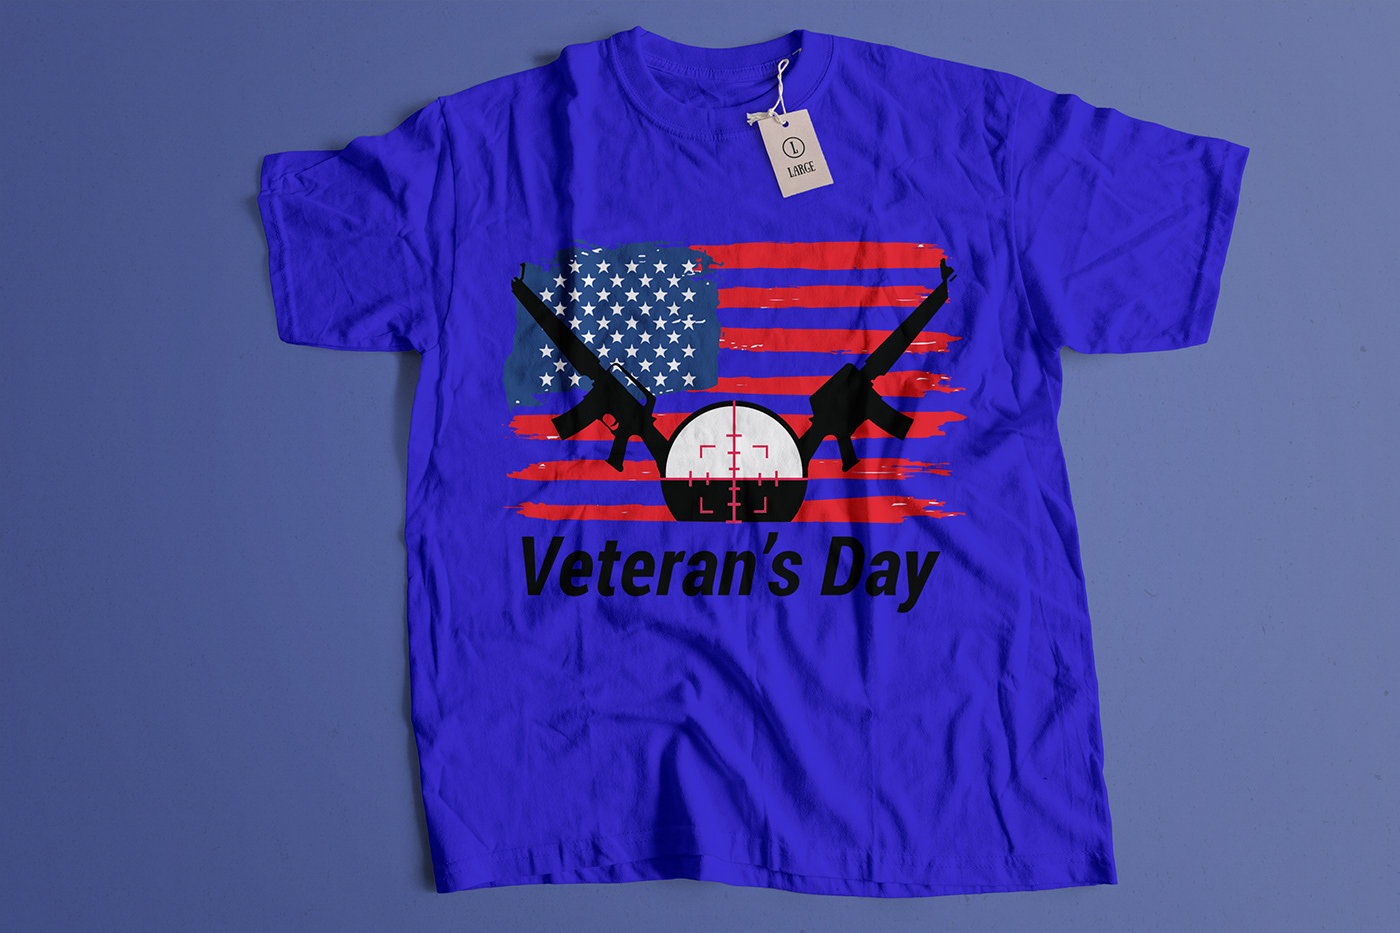 #Veteran’s Day T-shirt #Veteran’s Day #Veteran’s Day 2019 #Veteran’sdaytshirtdesign